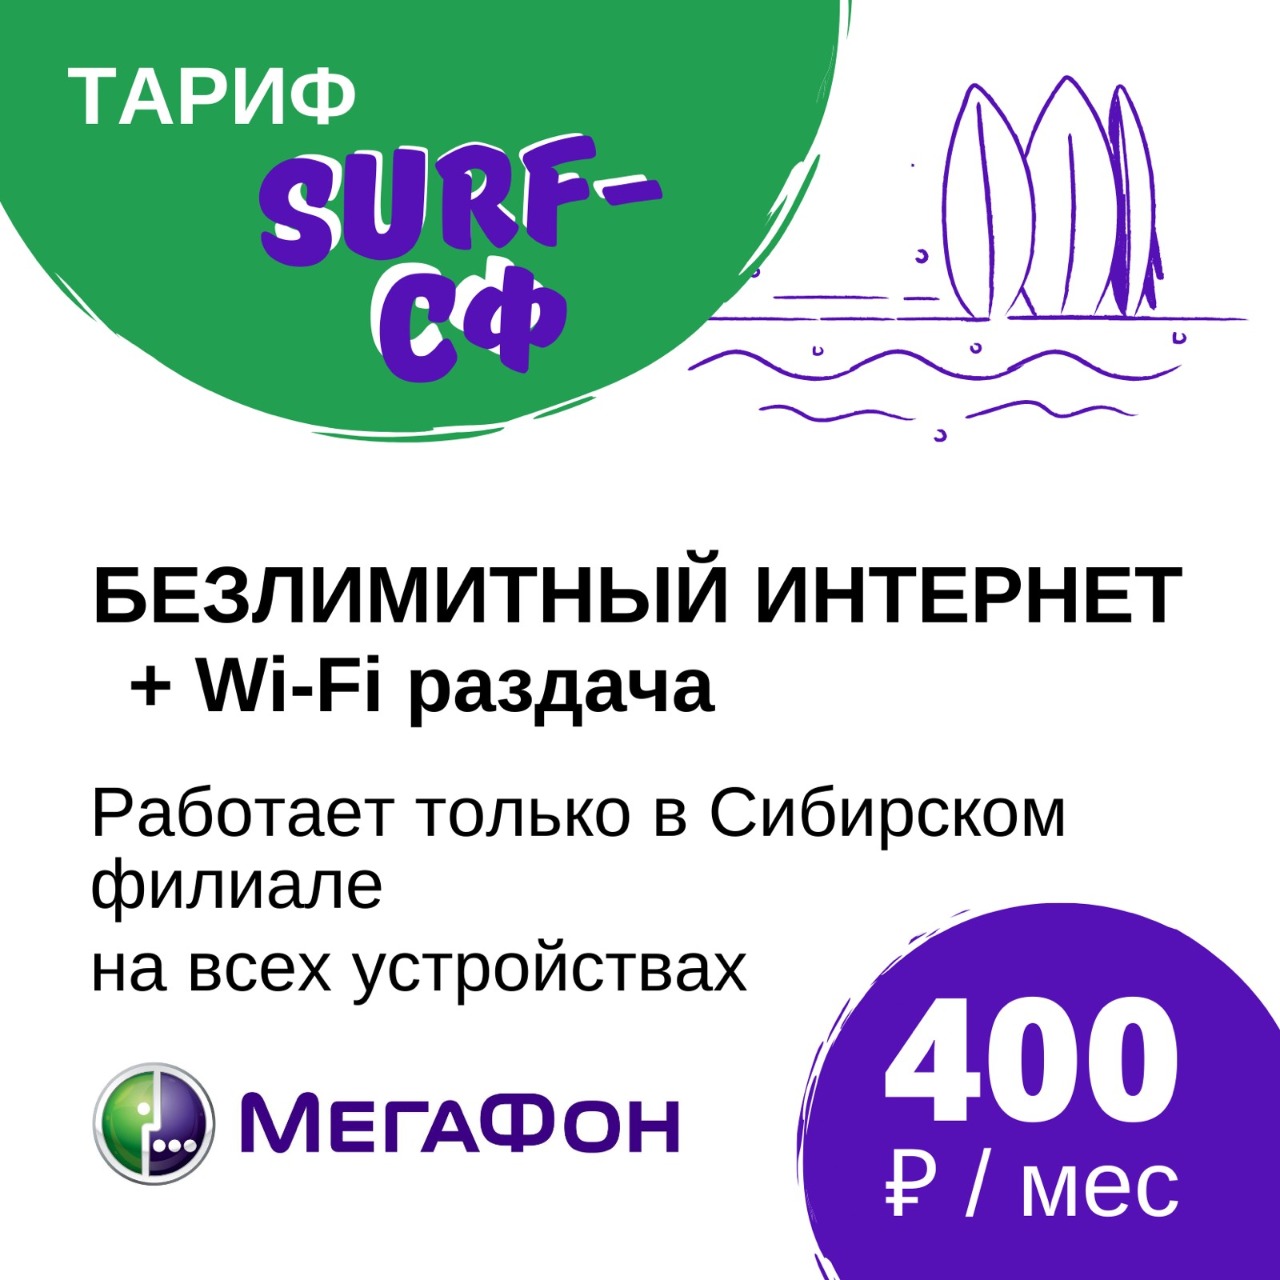 Саяногорск Инфо - whatsapp-image-2020-08-21-at-114743.jpeg, Скачано: 469